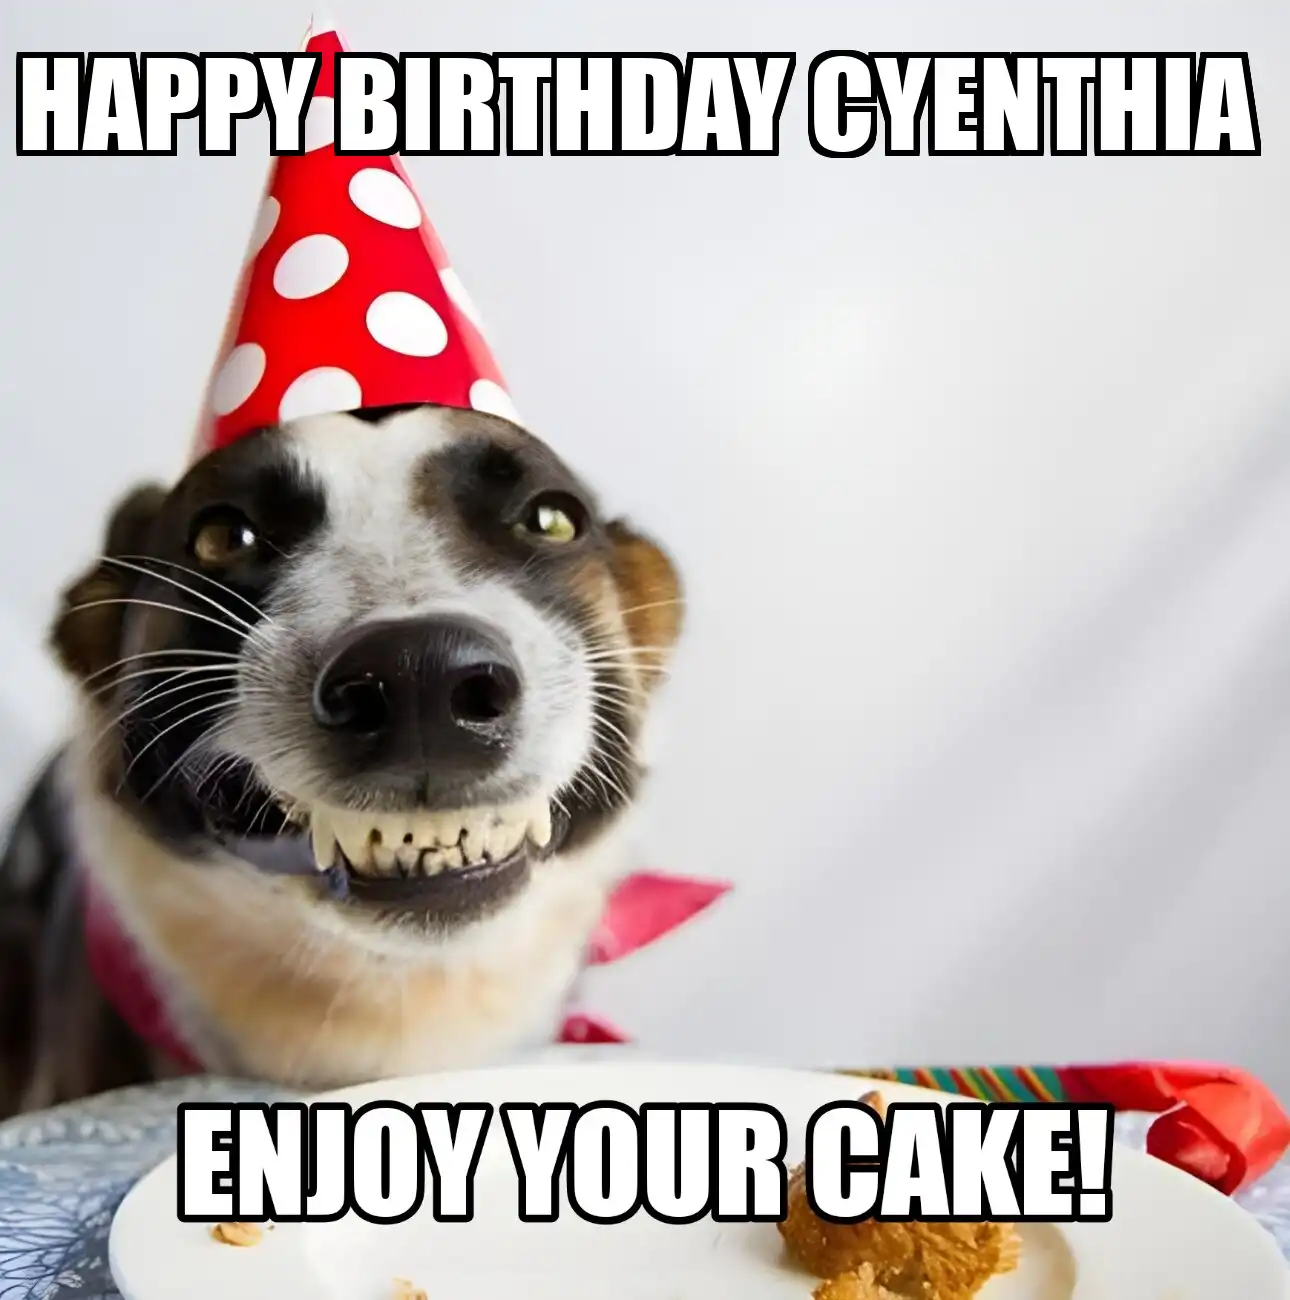 Happy Birthday Cyenthia Enjoy Your Cake Dog Meme